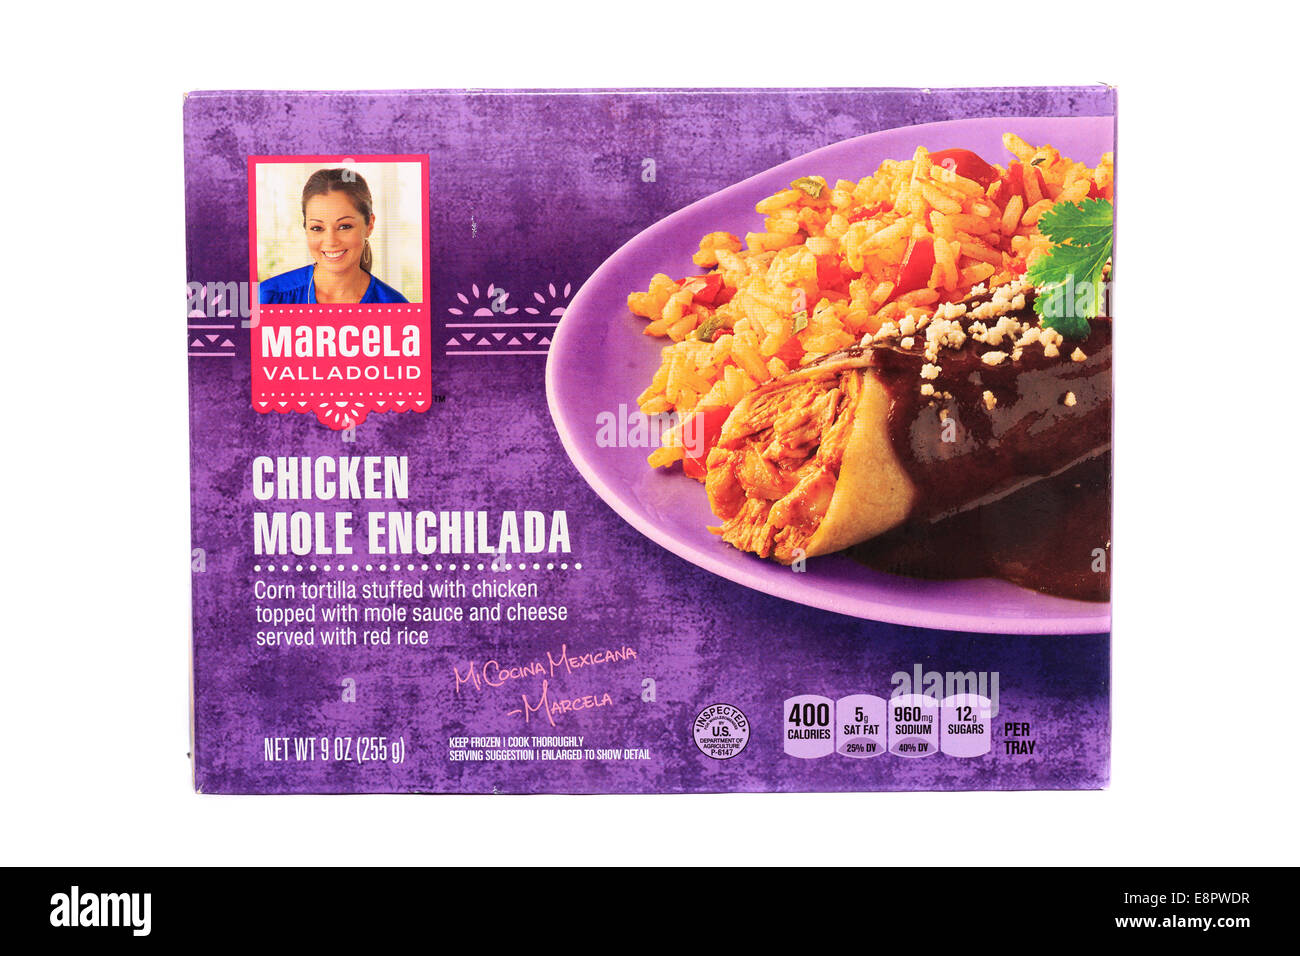 Safeway Brand Marcela Valladolid Chicken Mole Enchilada Ready Meal Prepared from frozen Stock Photo